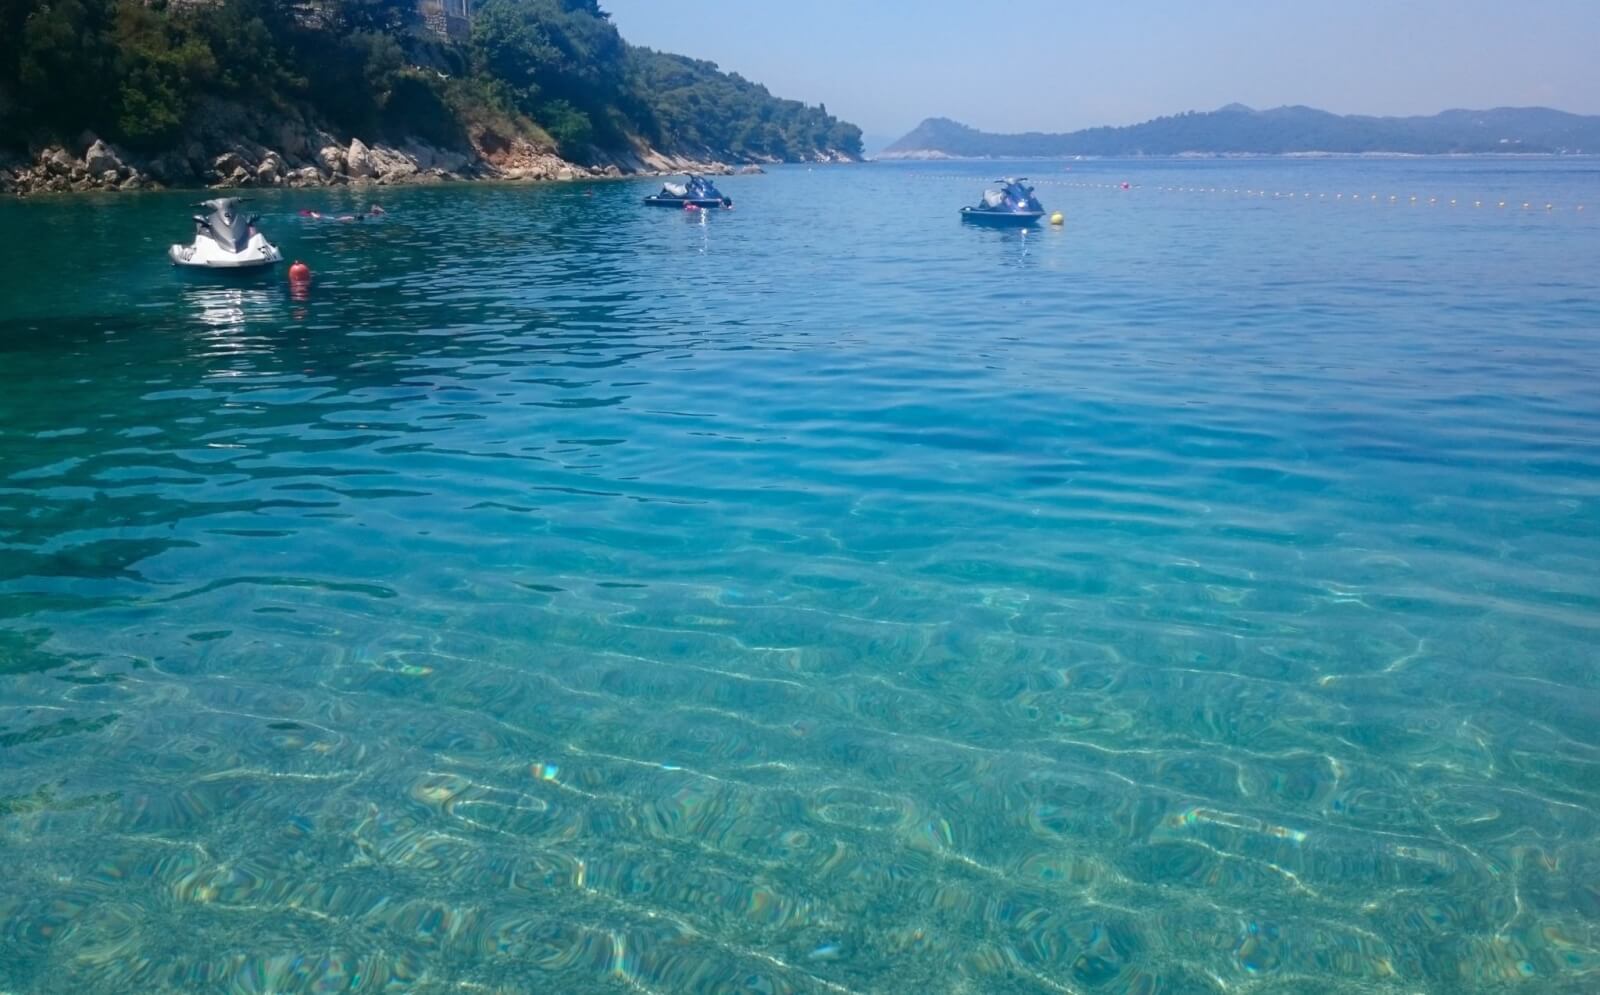 The clear waters of Lopud, Croatia